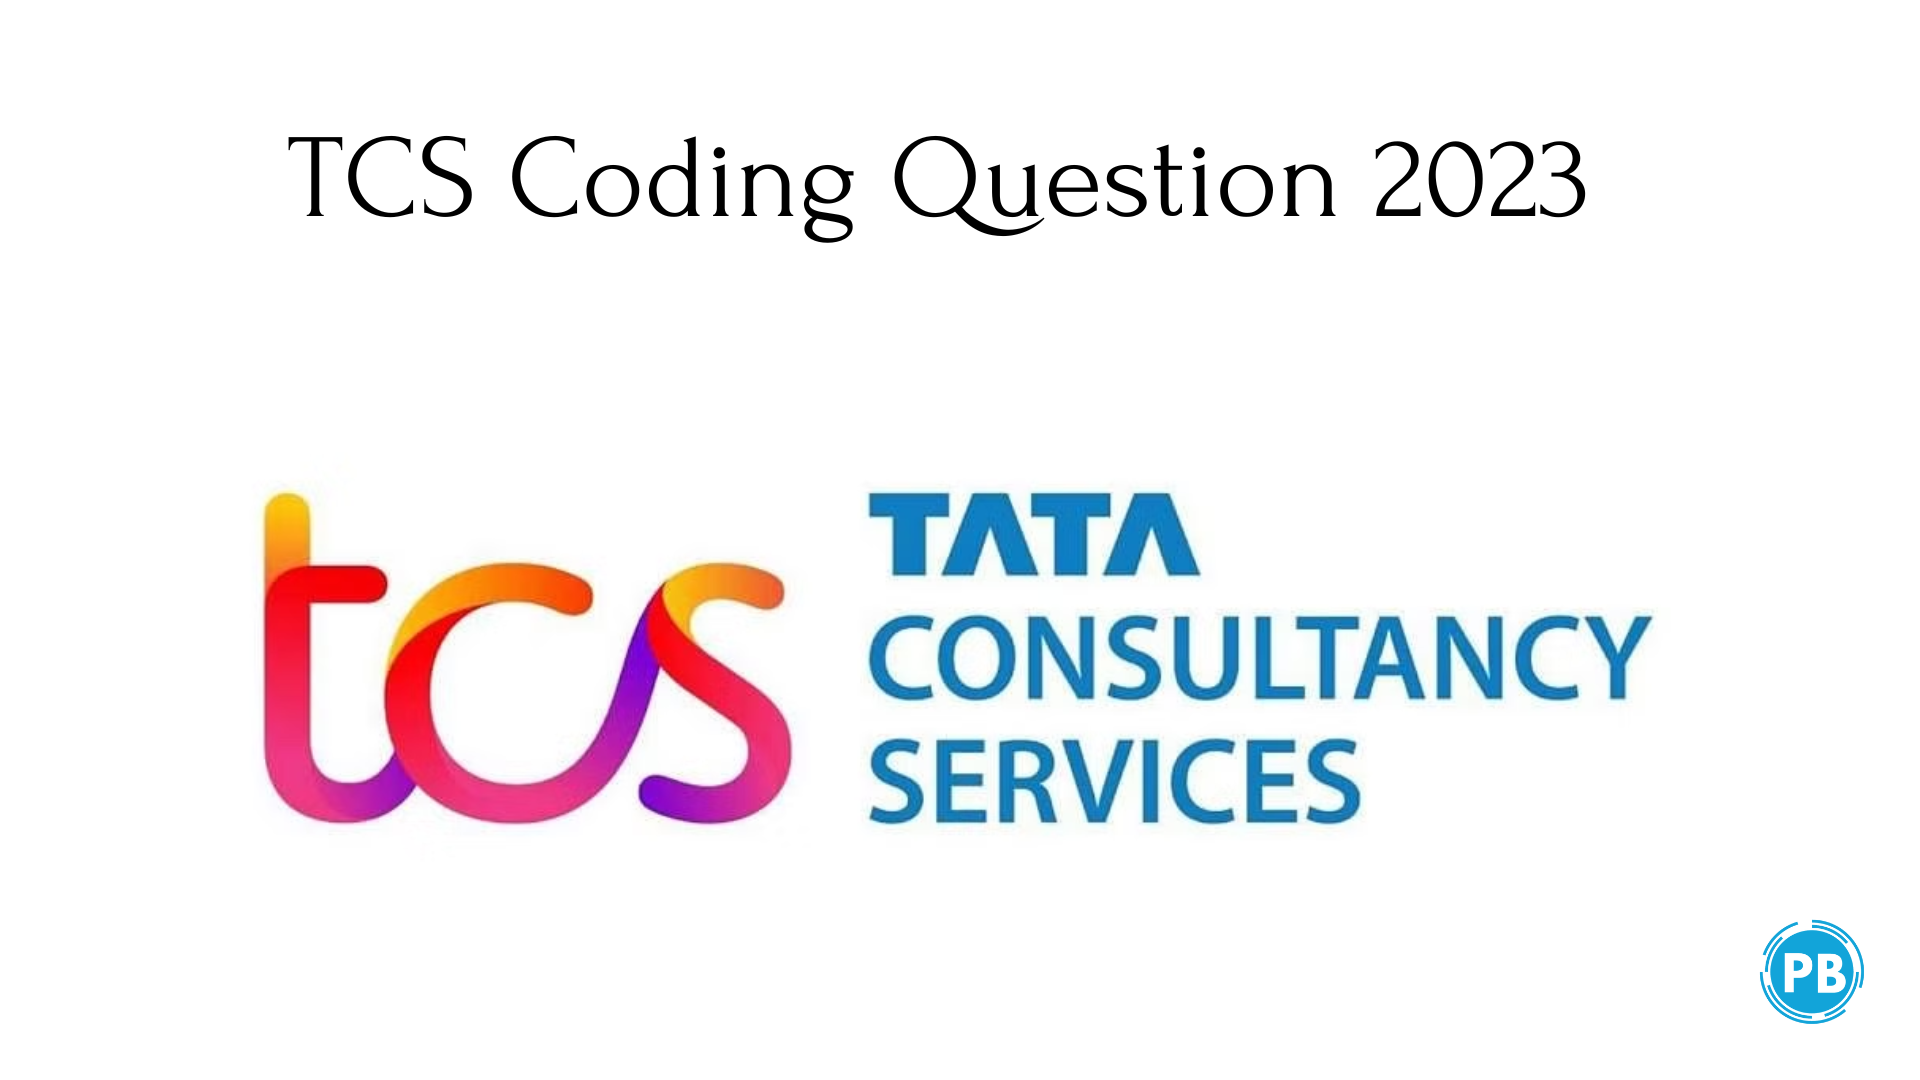 TCS Coding Questions & Solution 2023 details